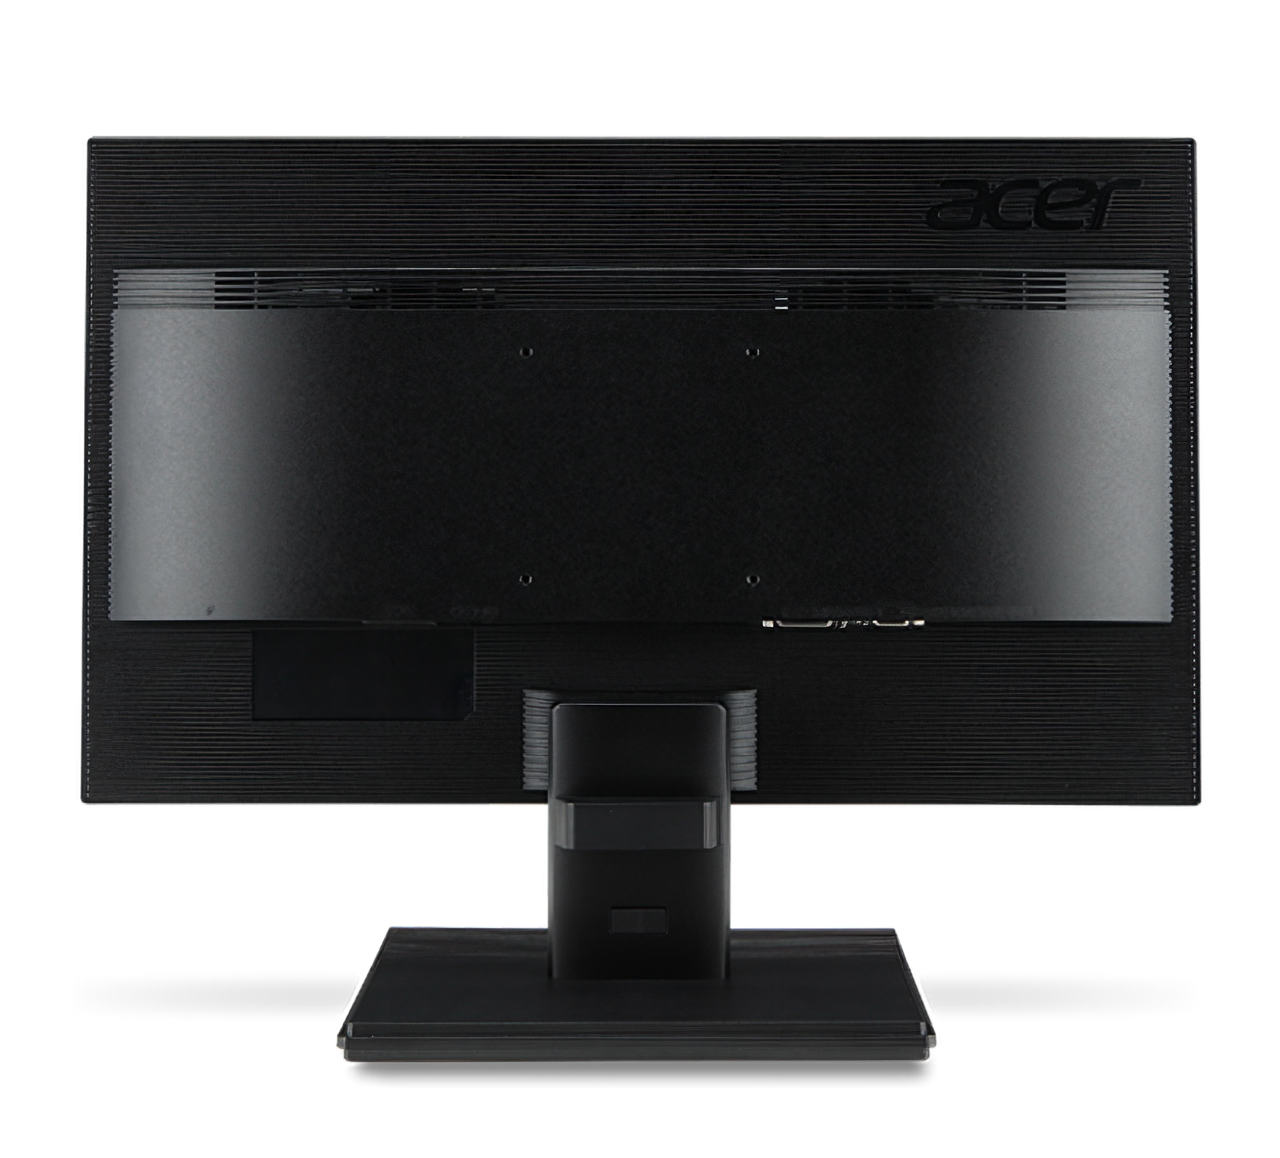 ACER 24inch V246HLbid 5ms 100M:1 ACM 250nits 1920x1080 DVI w/HDCP HDMI VGA EURO/UK EMEA TCO6.0 Black EcoDisplay(A)